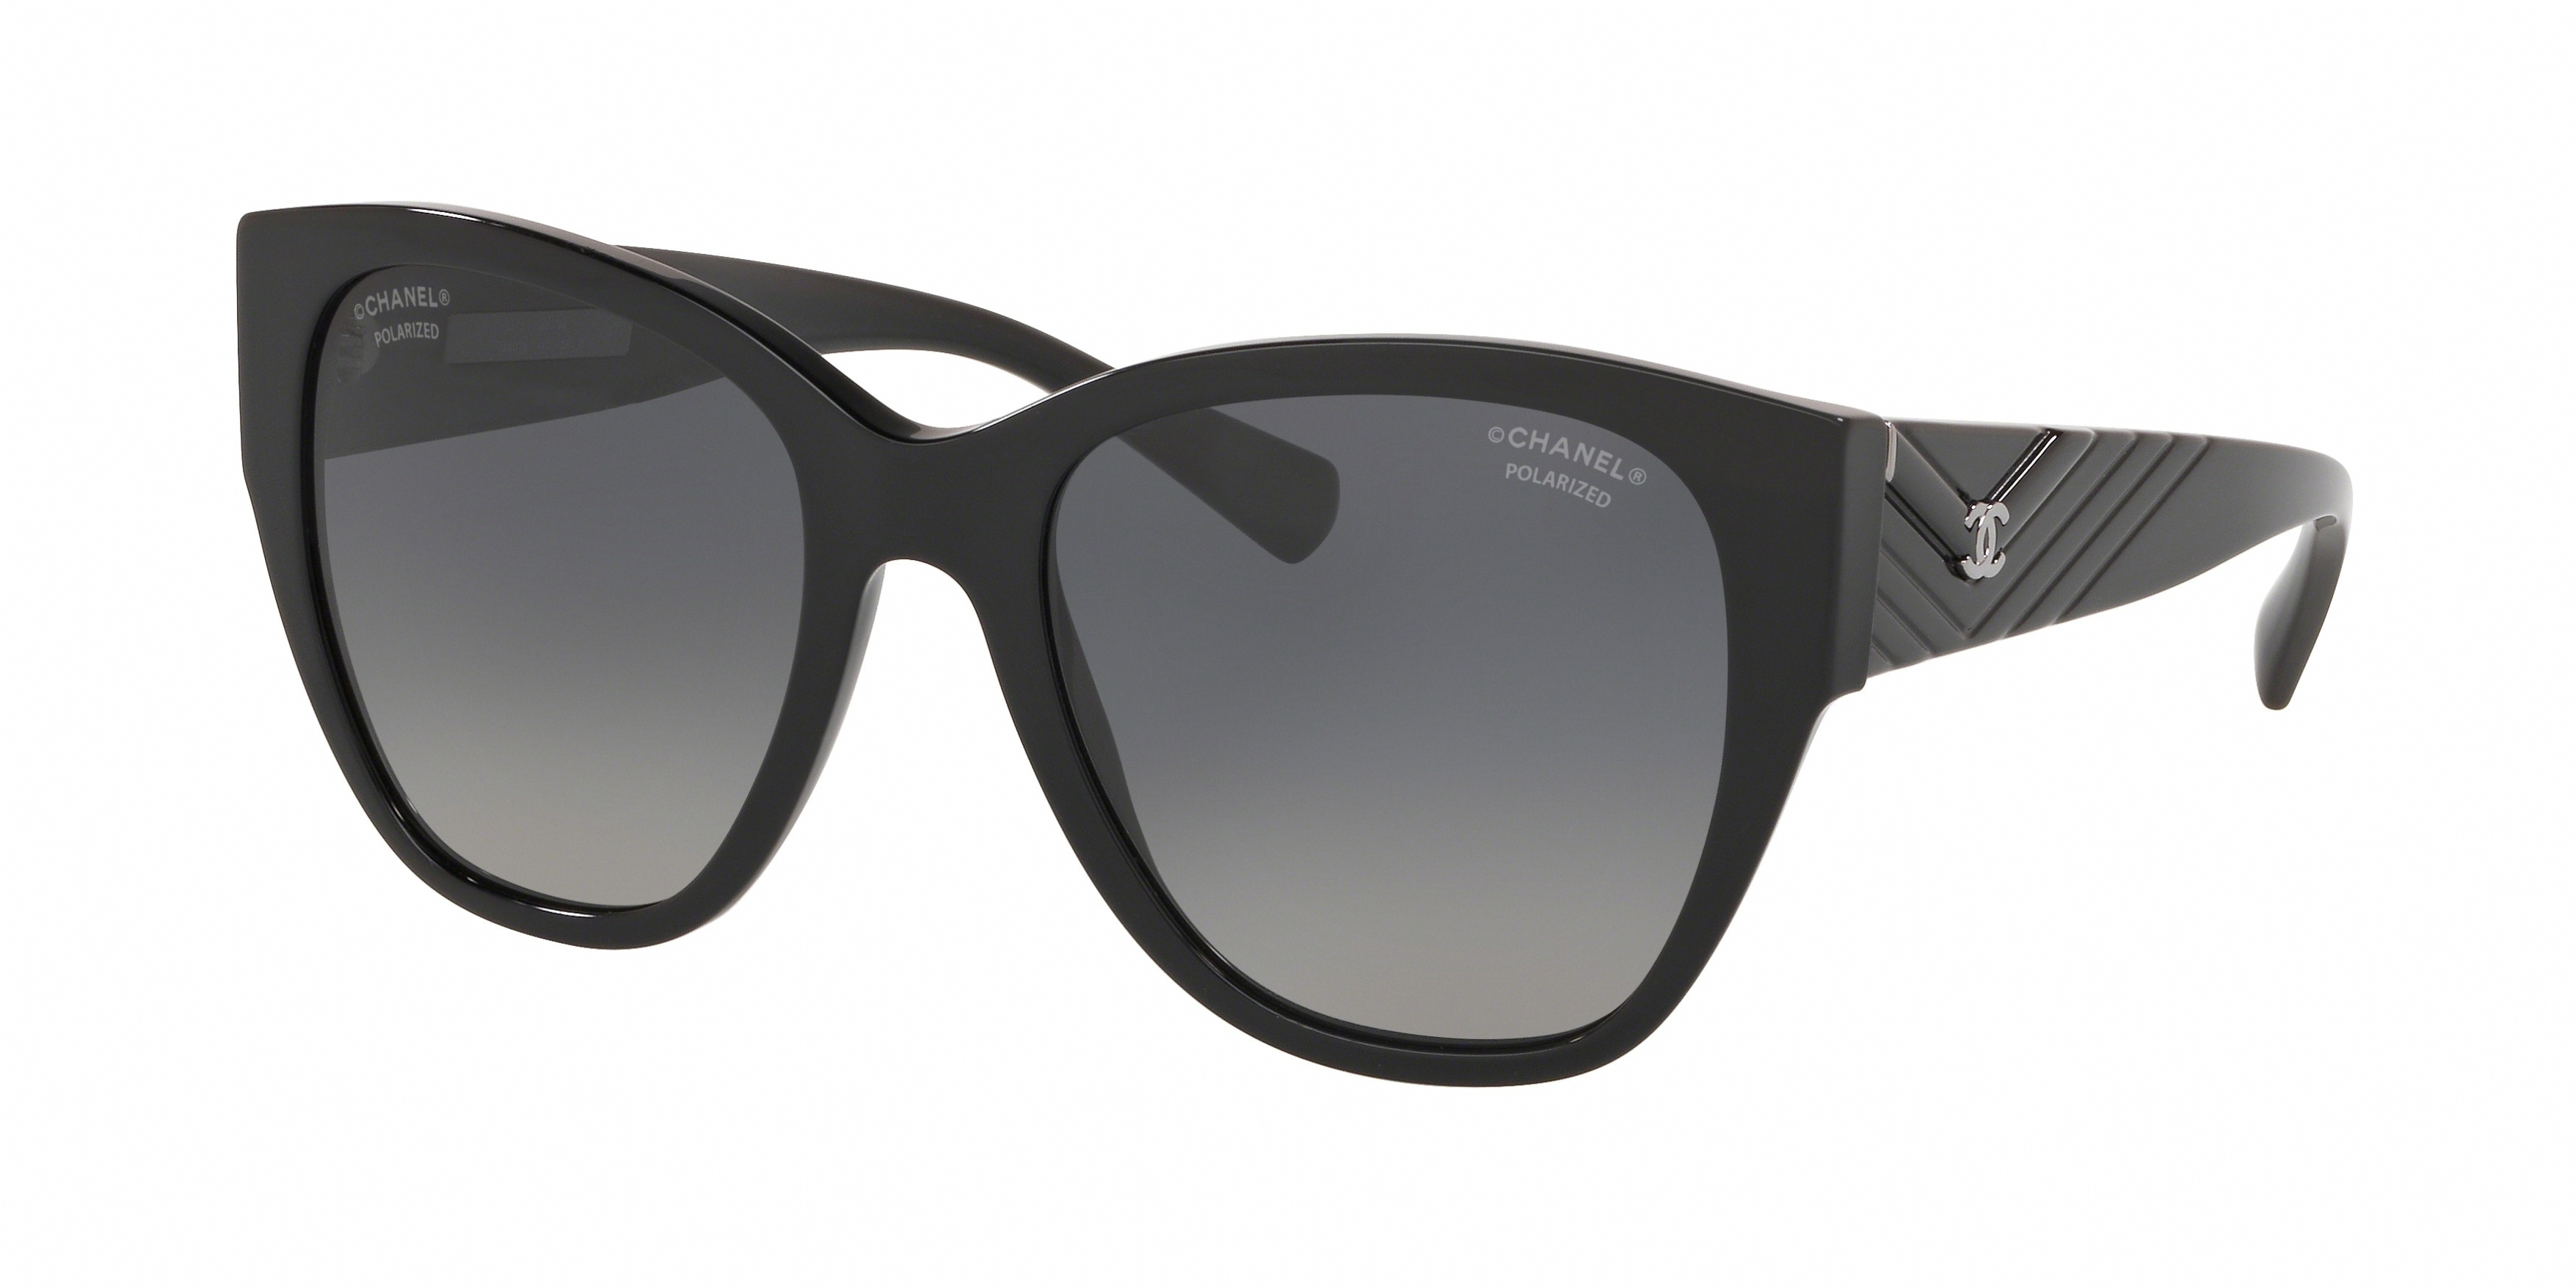 Chanel 5412 Sunglasses